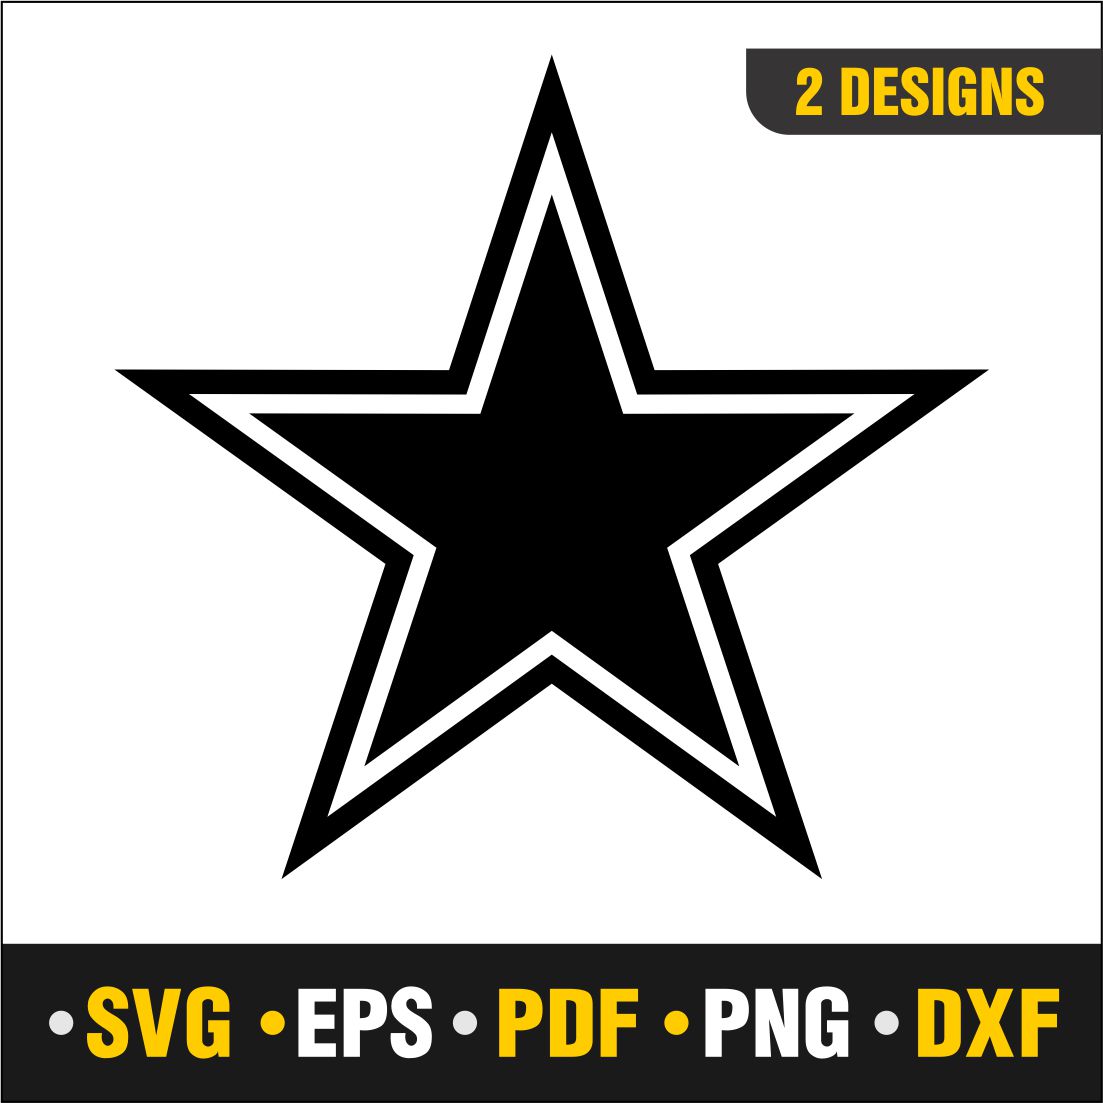 Dallas Cowboys SVG, PDF, PNG, DXF, EPS.